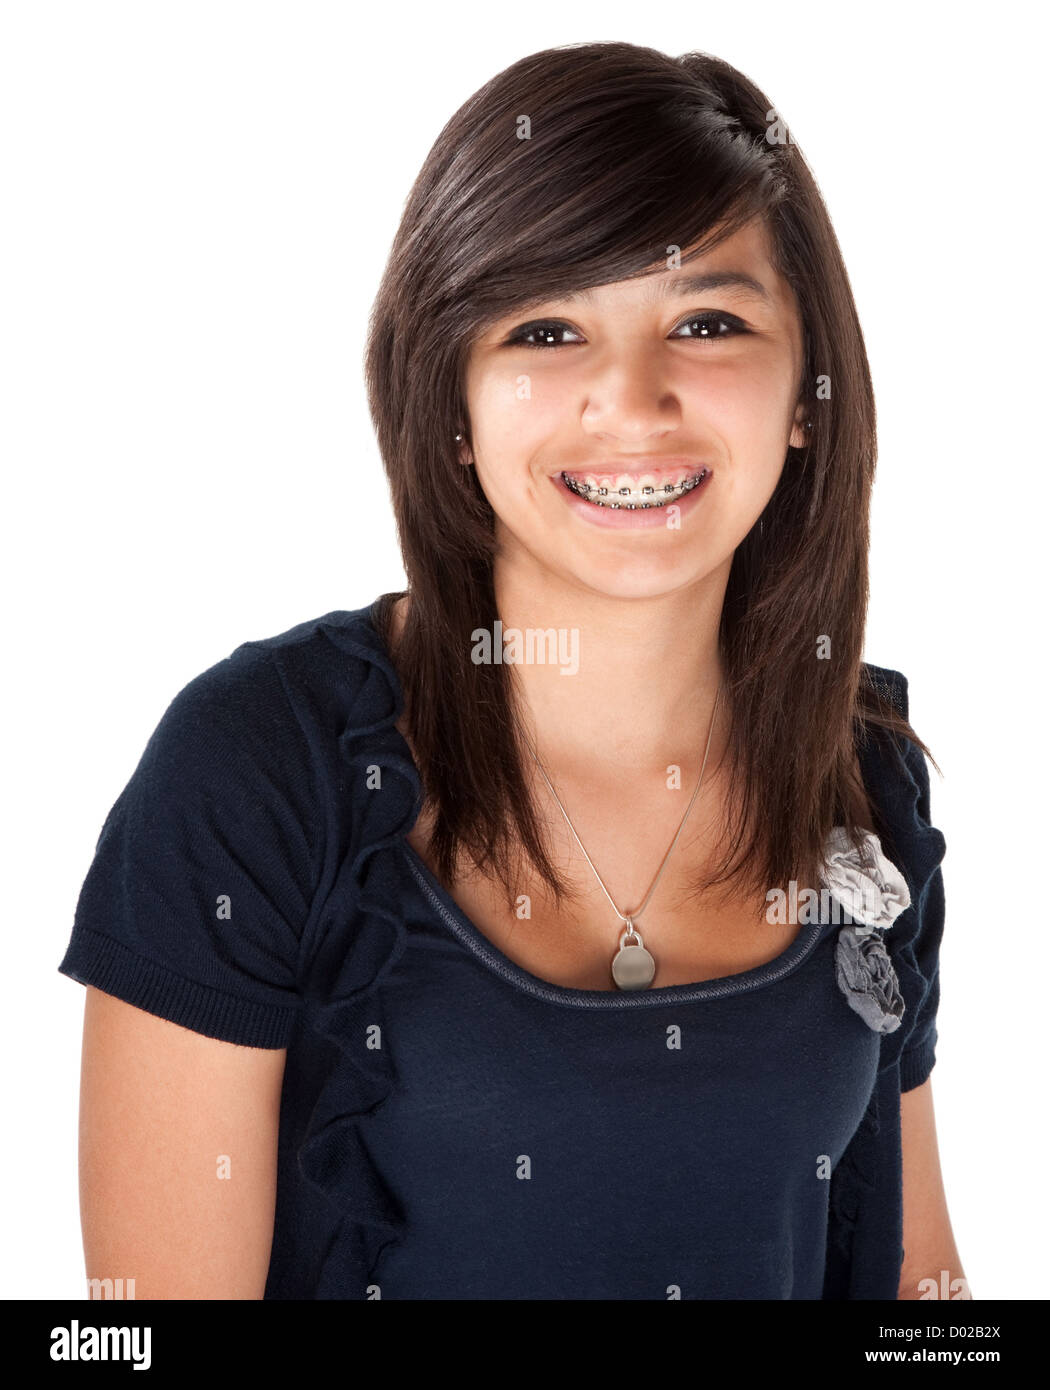 Cute Hispanic teenage girl with braces and a big smile Stock Photo